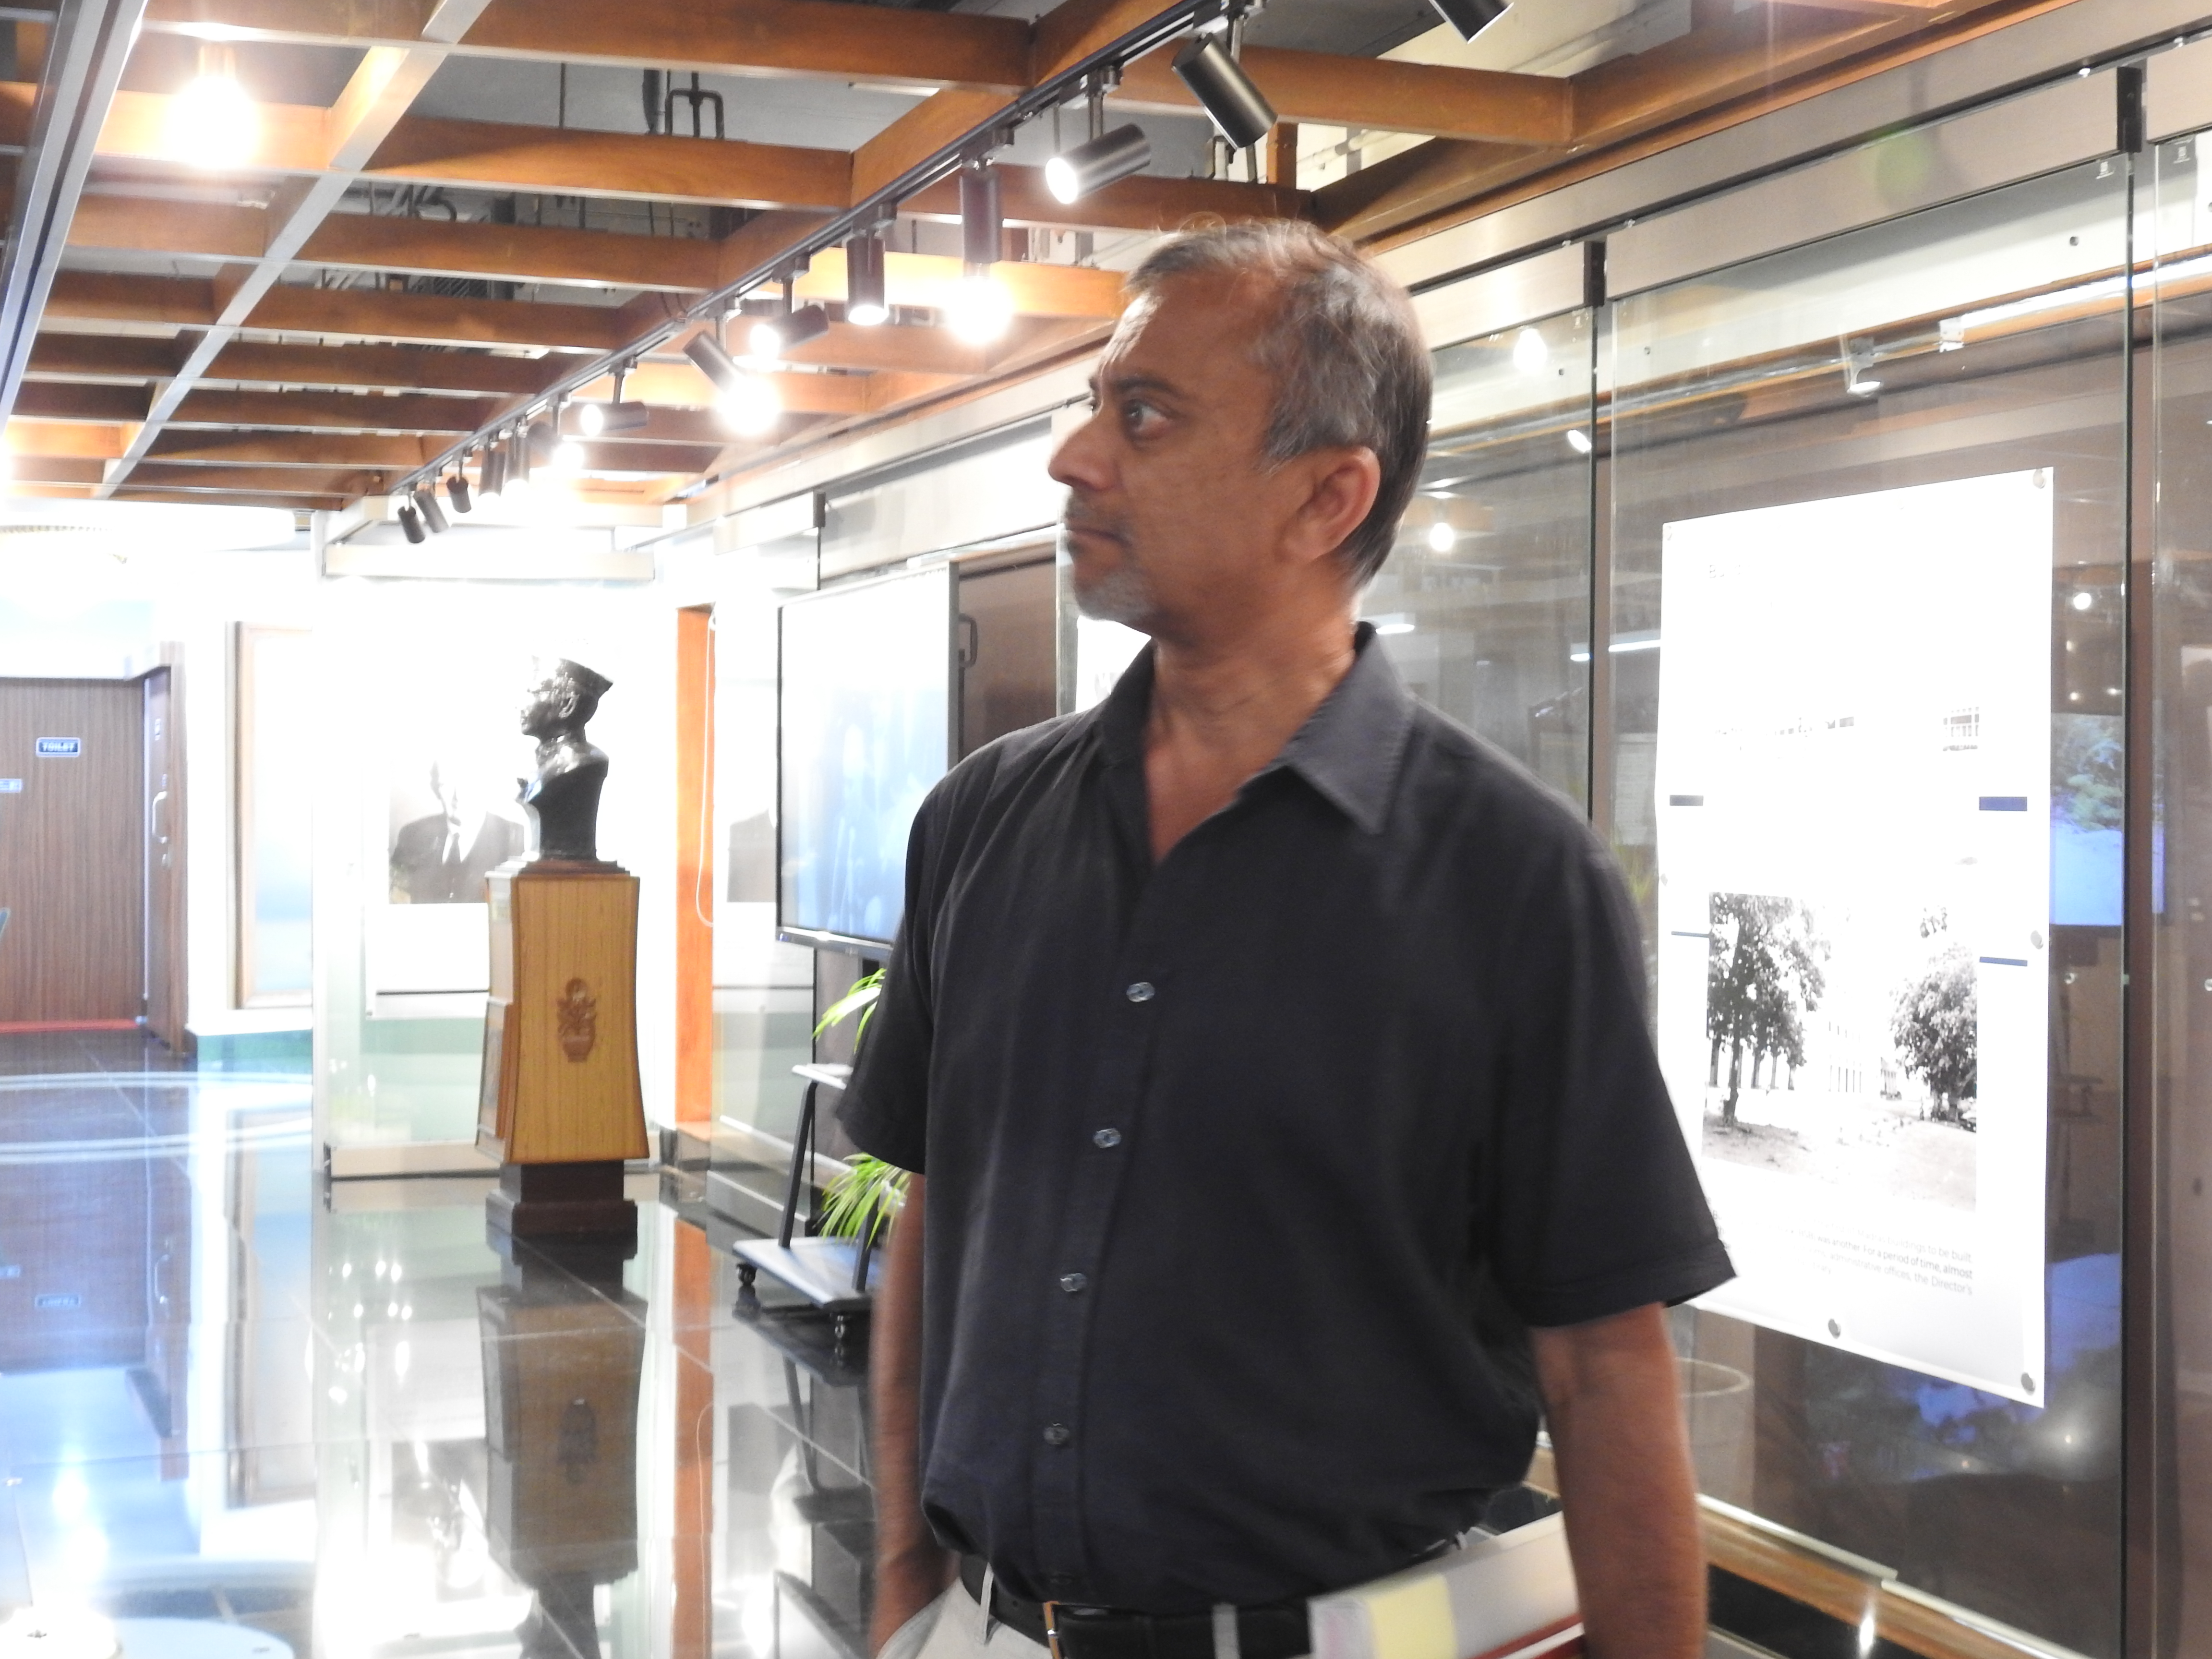 Mr. Pratap Subrahmanyam (1985 batch alumnus) at the Heritage Centre